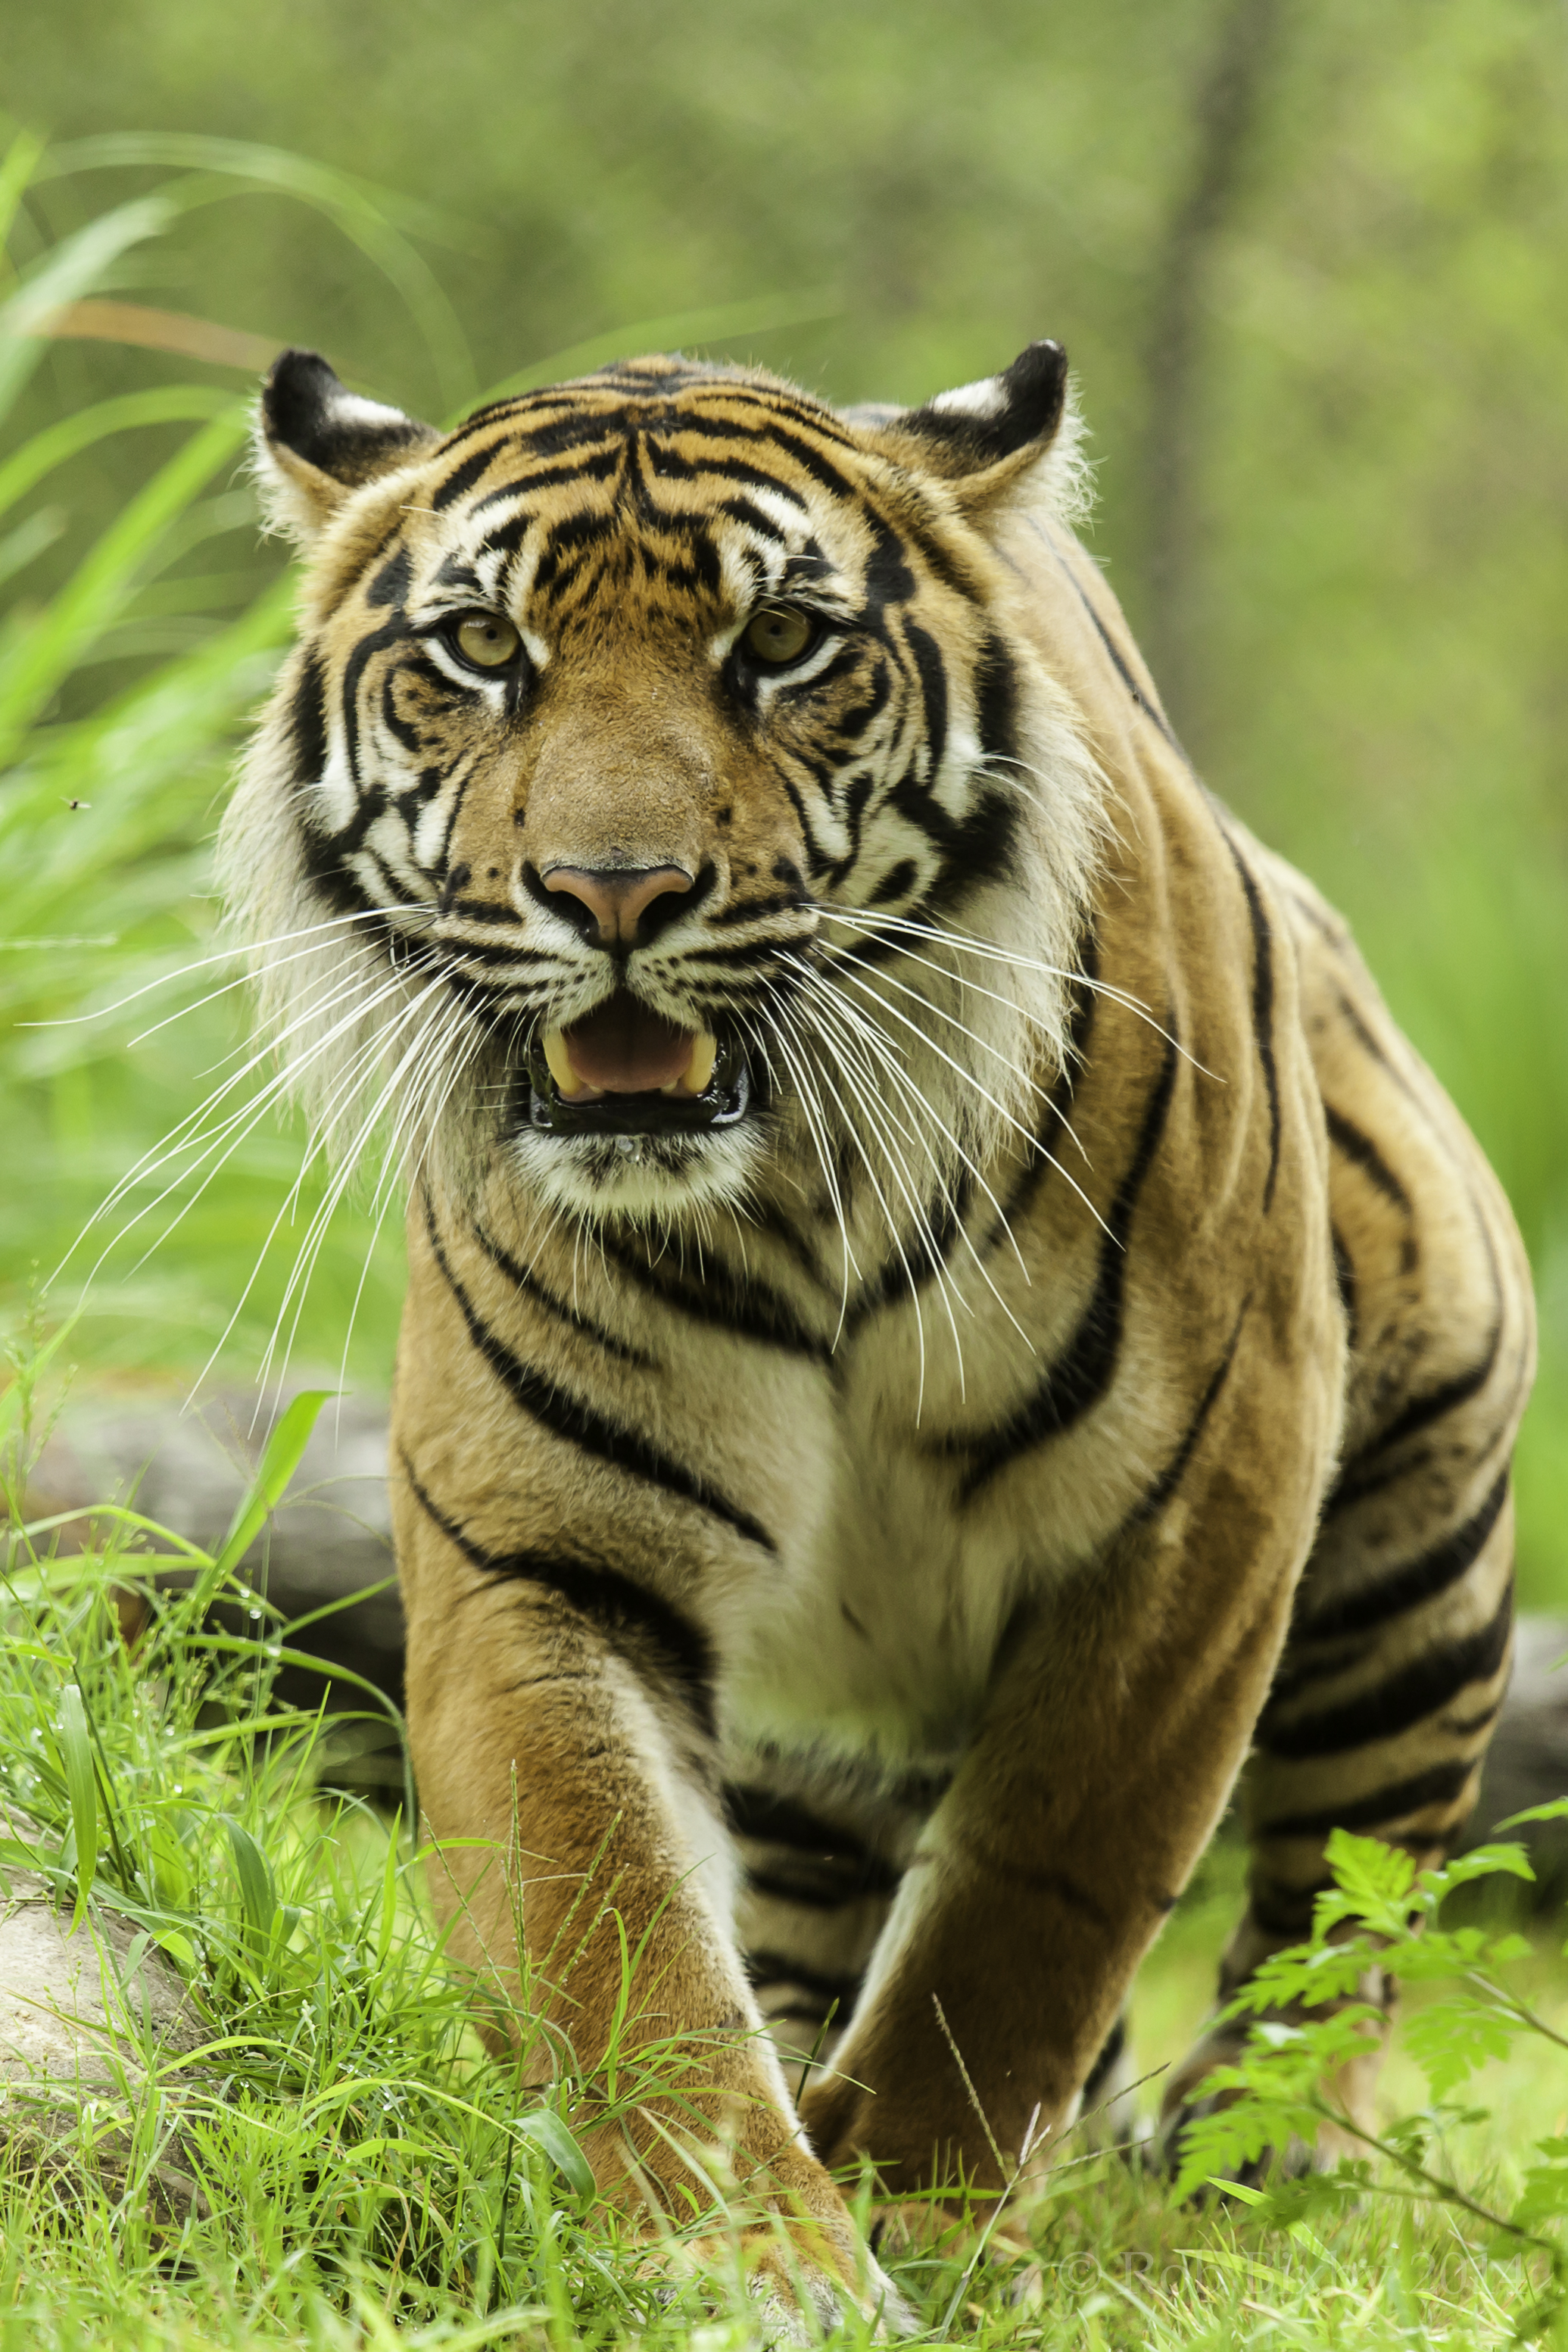 1080p Tiger Hd Images